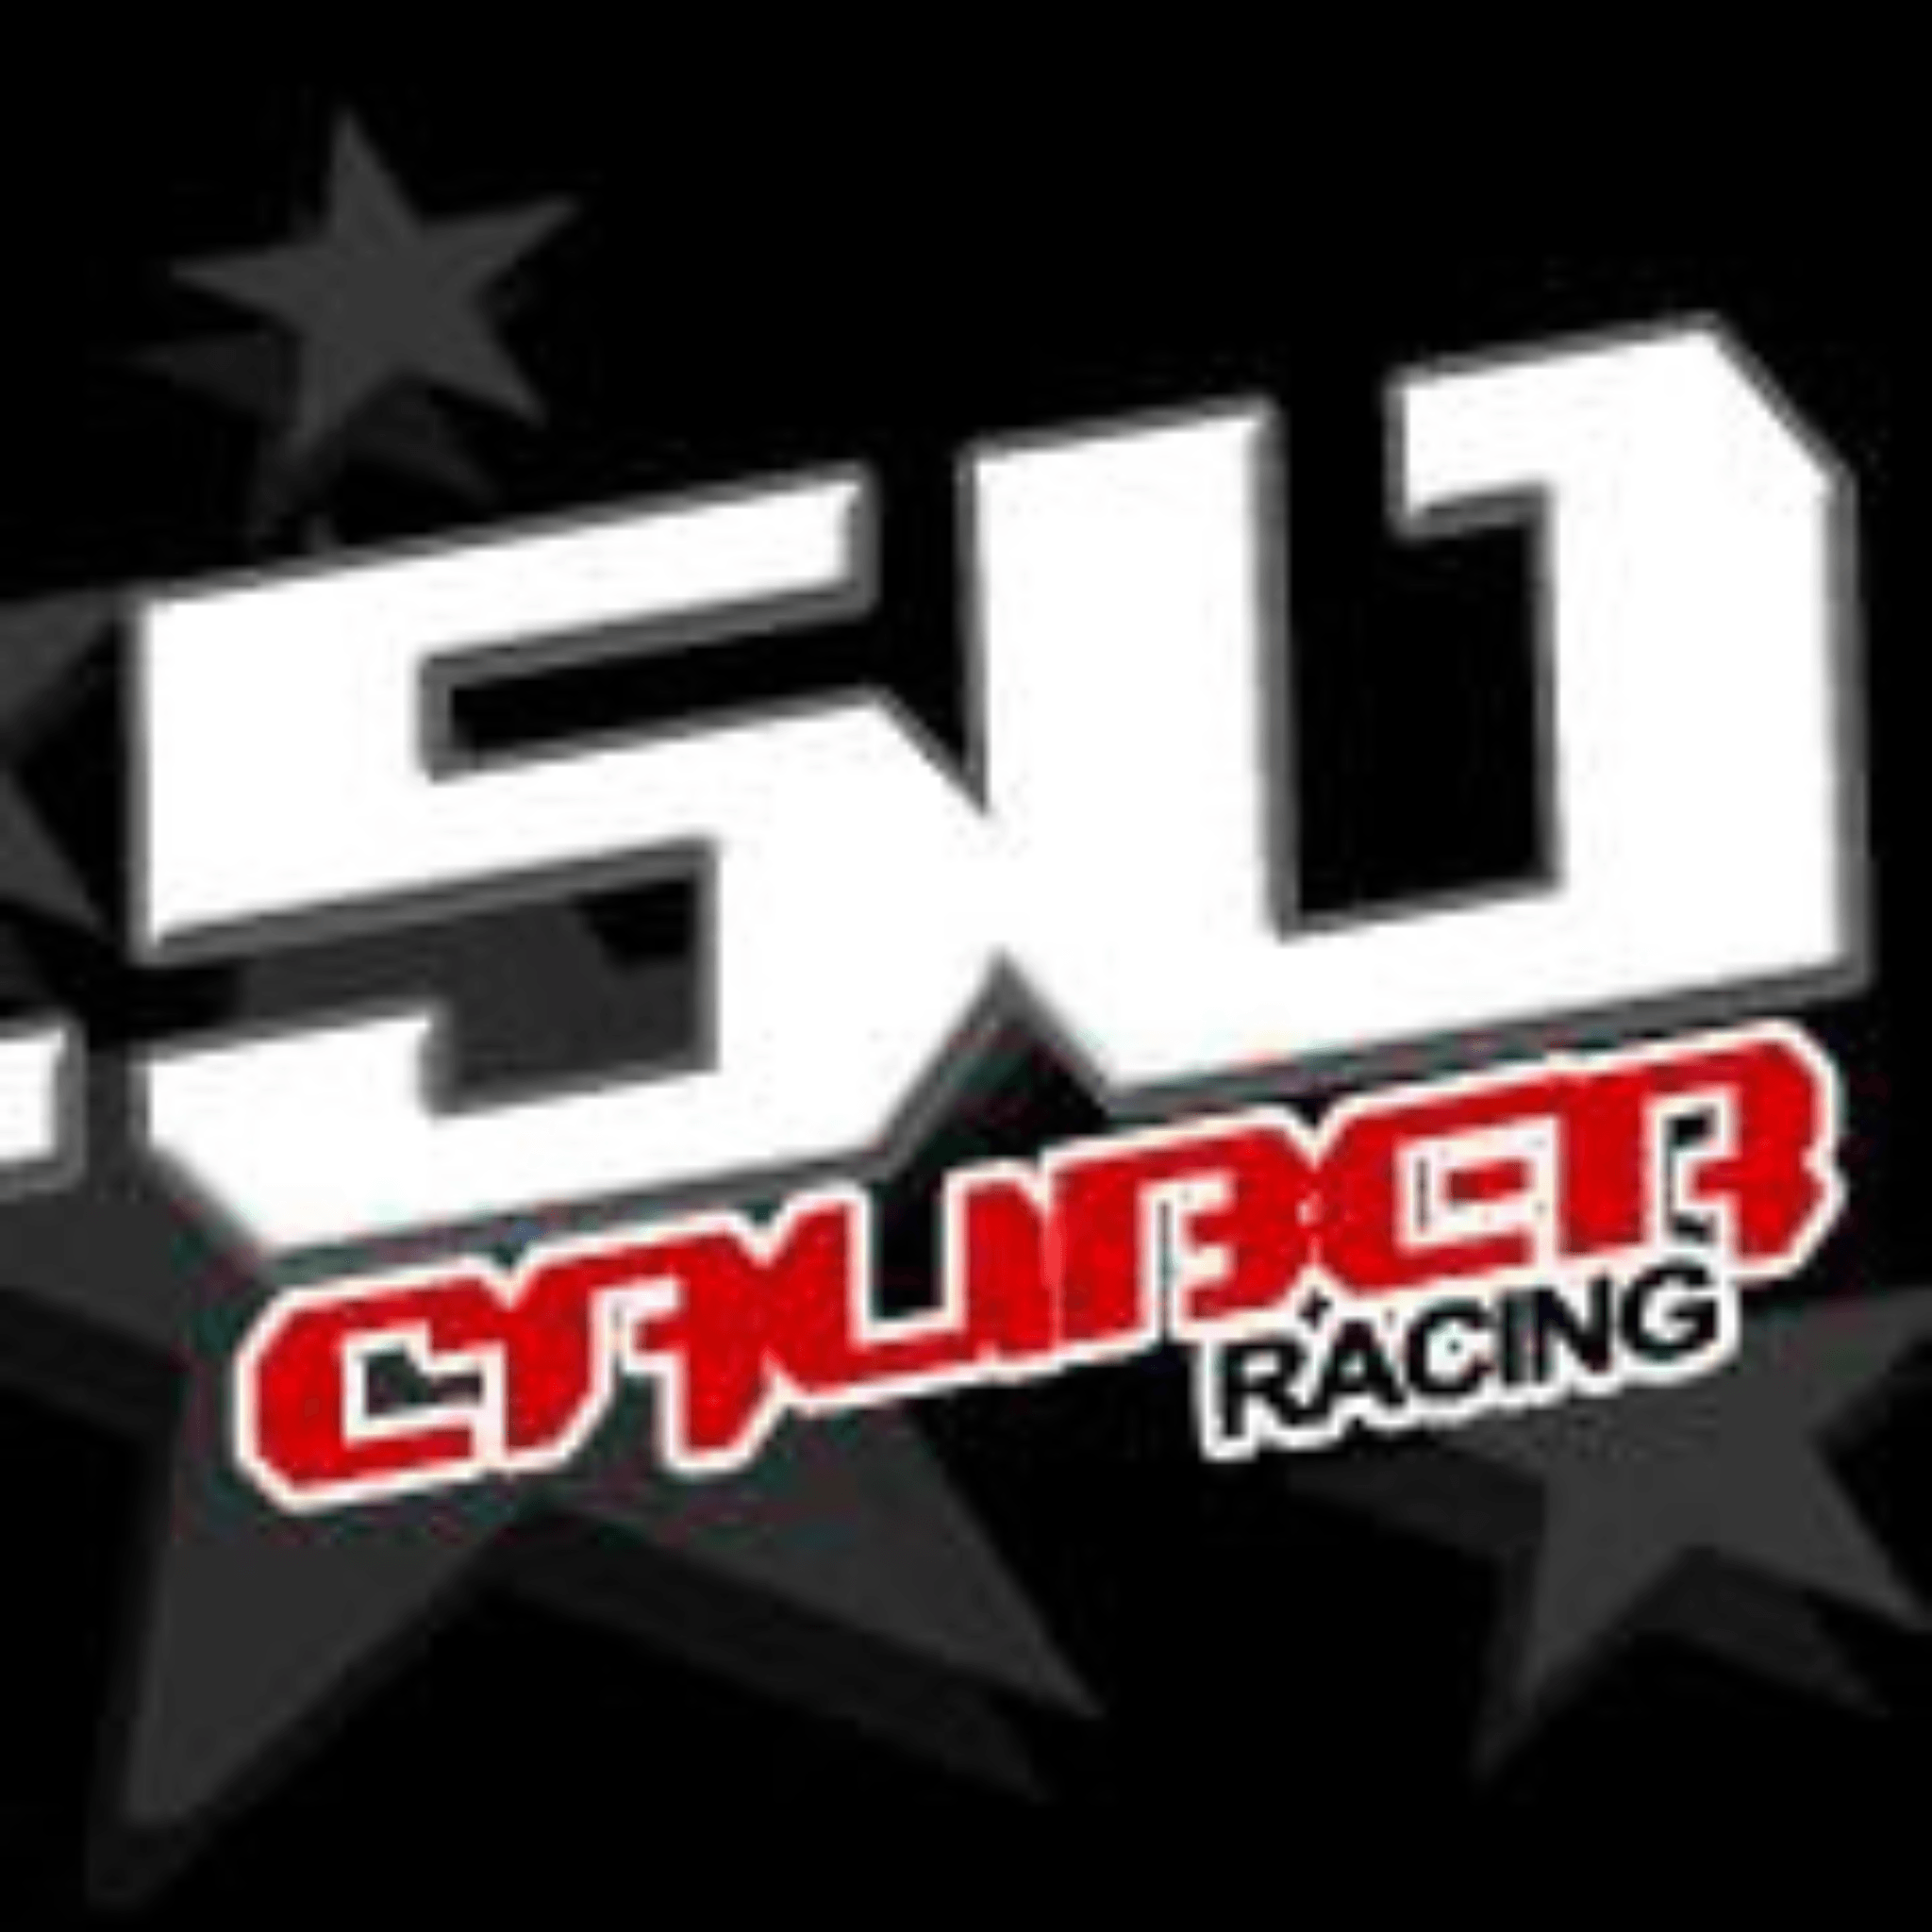 50 Caliber Racing - R1 Industries